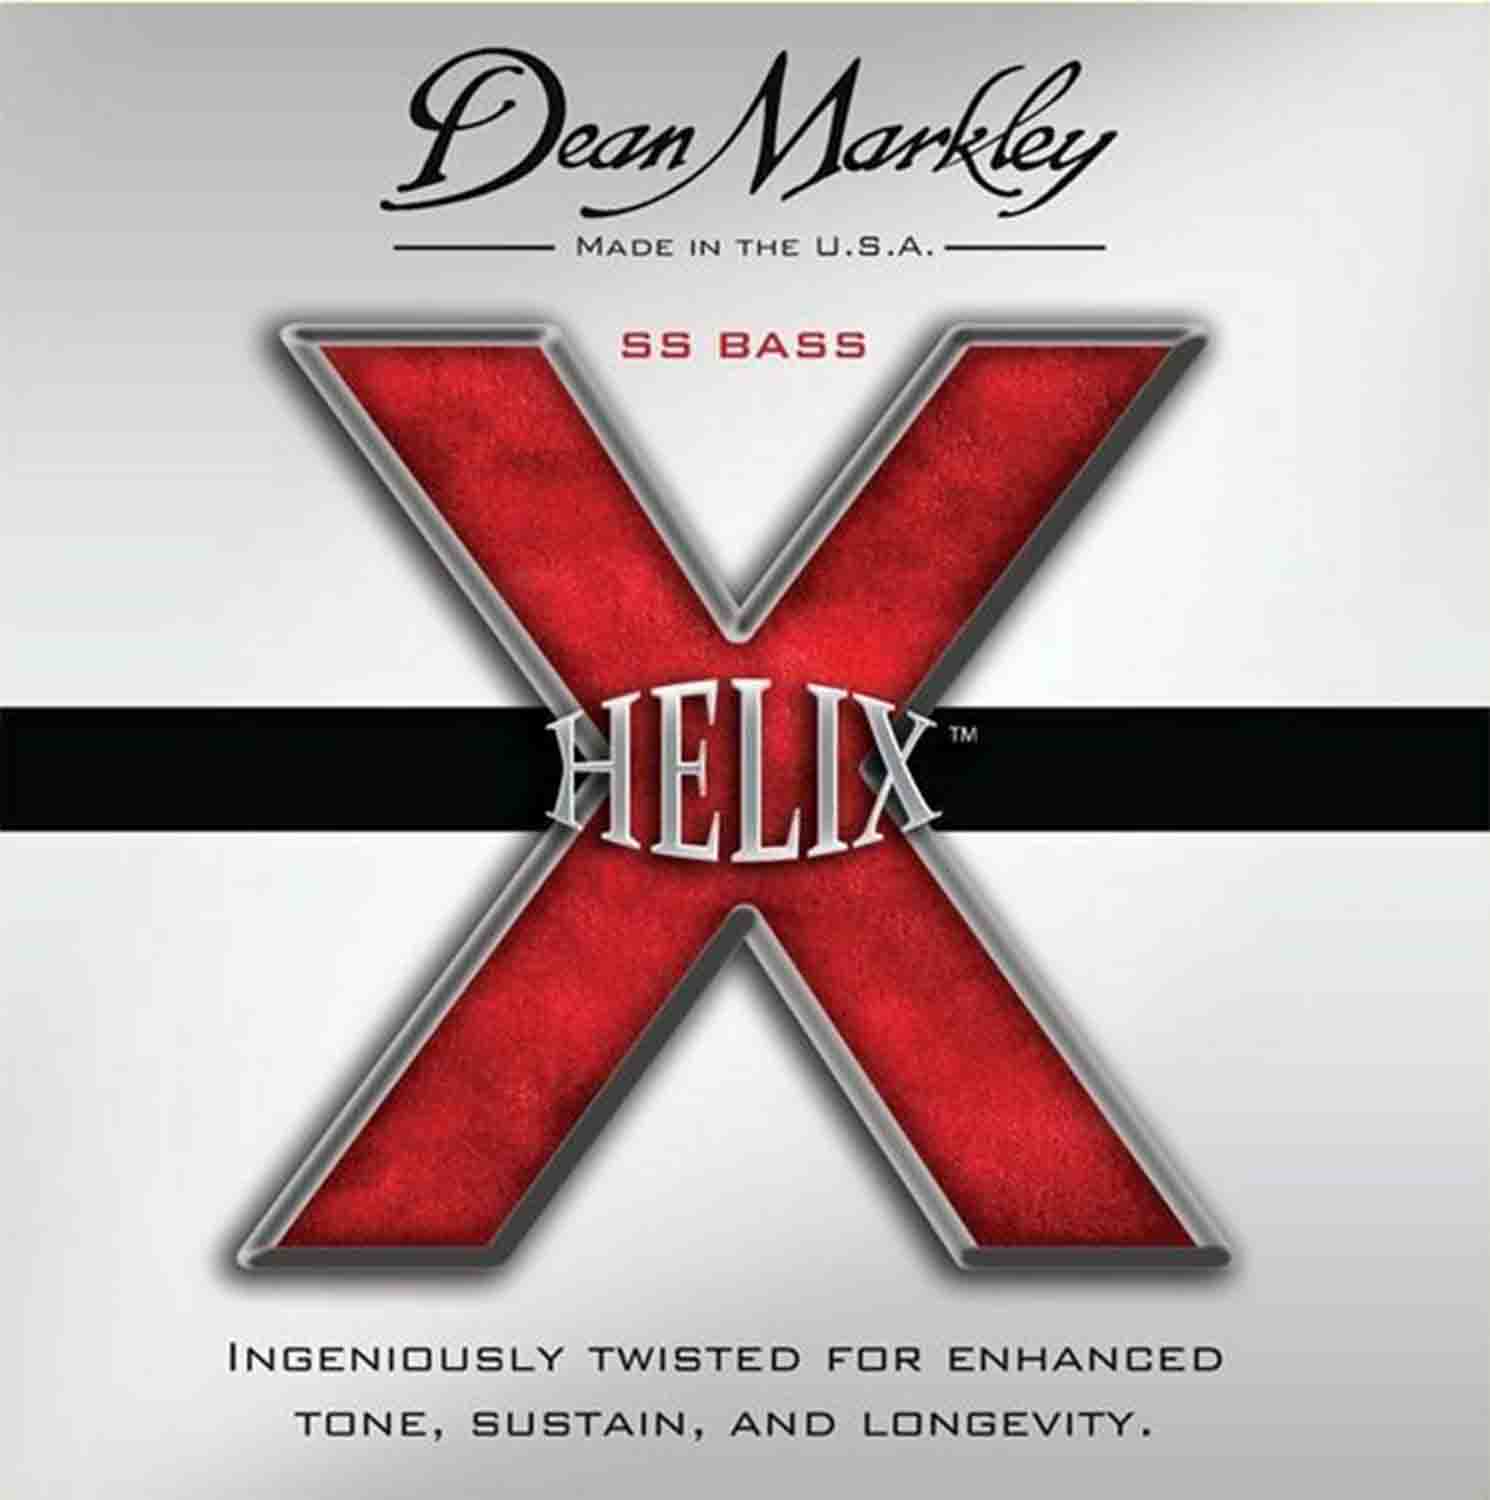 Dean Markley 2614 Helix Stainless Steel Strings Bass Guitar Medium Light (45-105) - Hollywood DJ